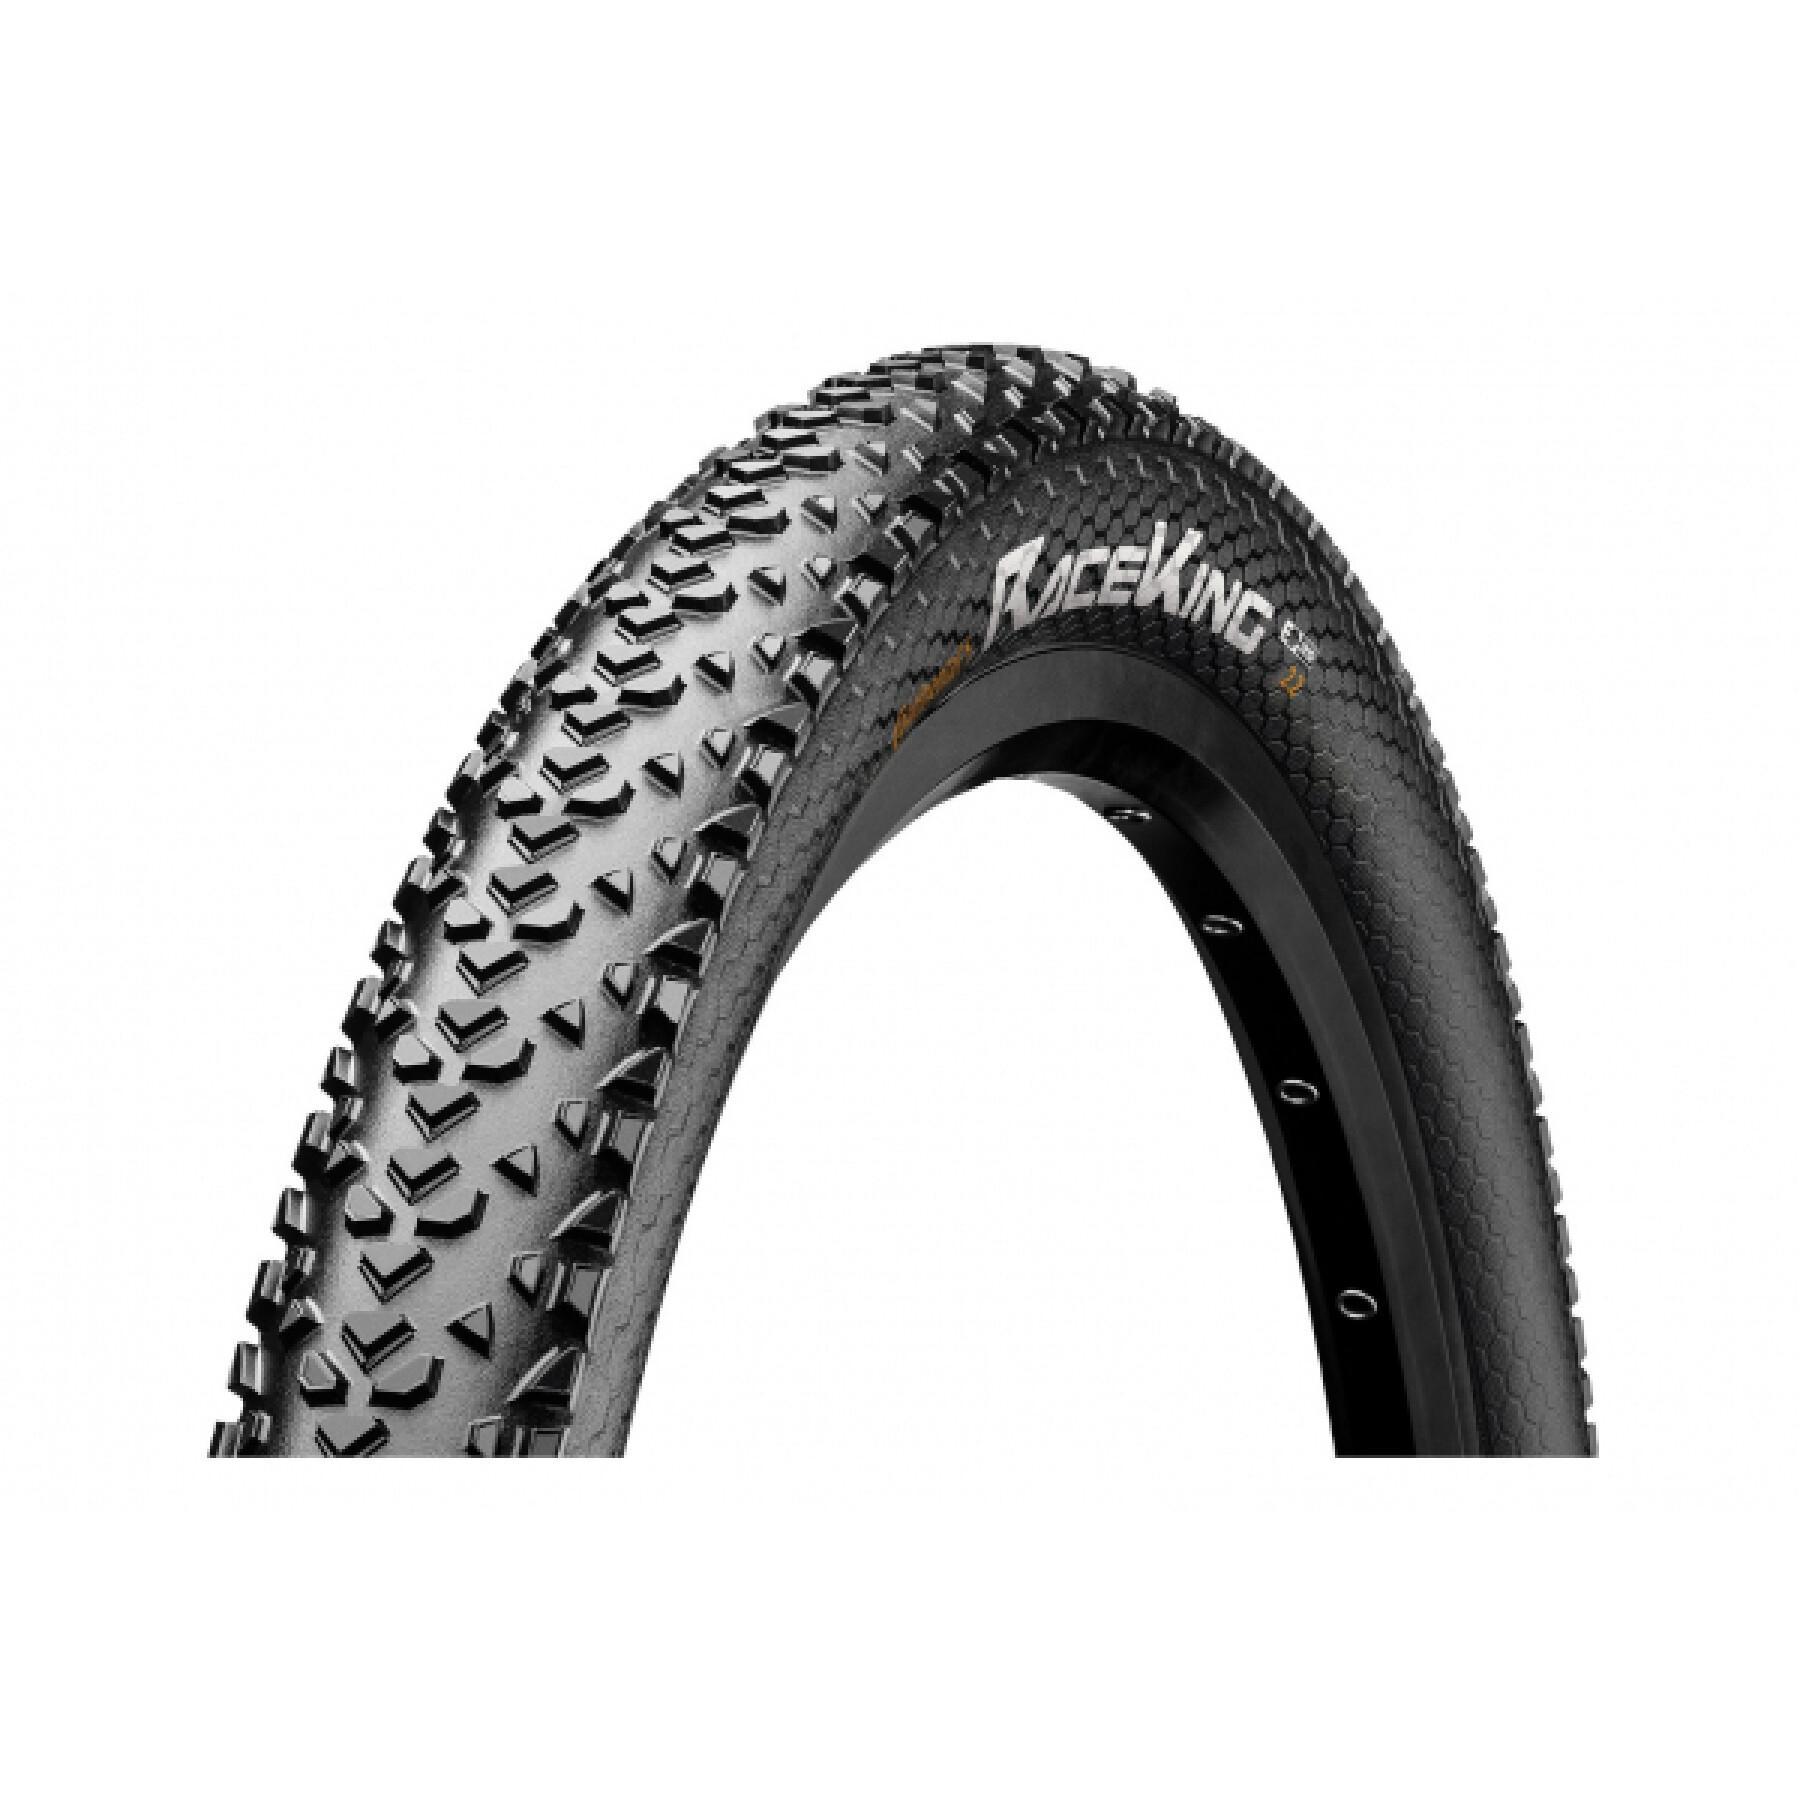 Rigid mountain bike tire Continental Race-King 55-559